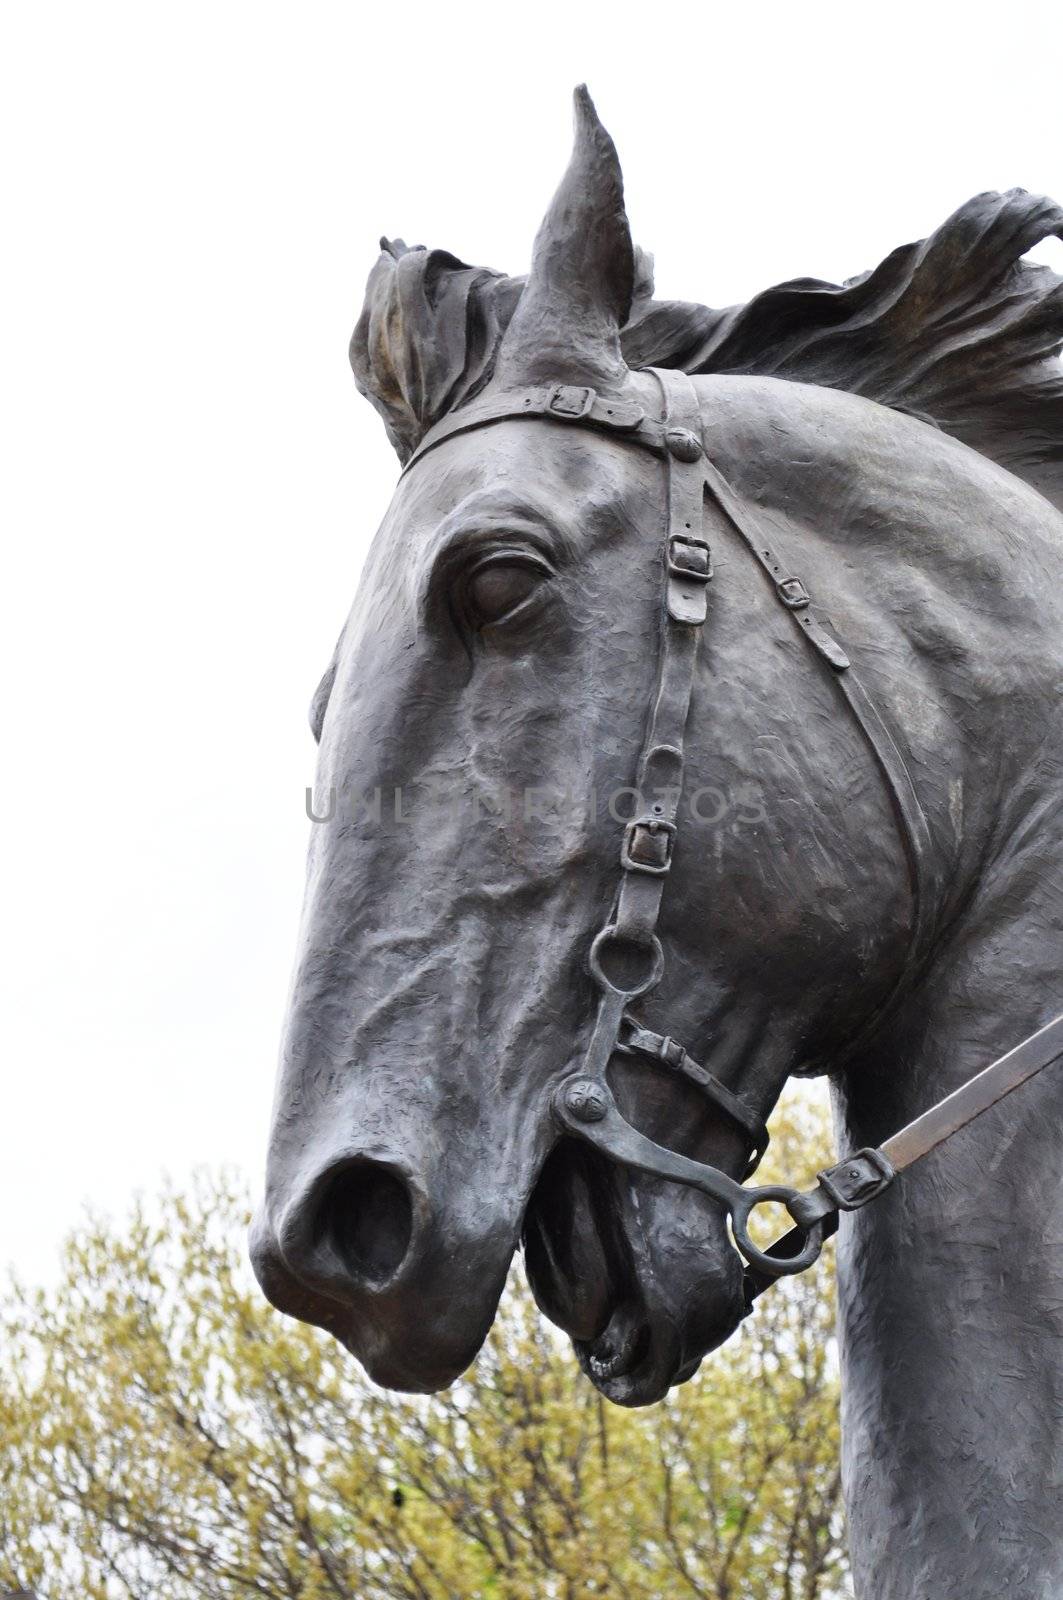 Waco statue horse closeup by RefocusPhoto